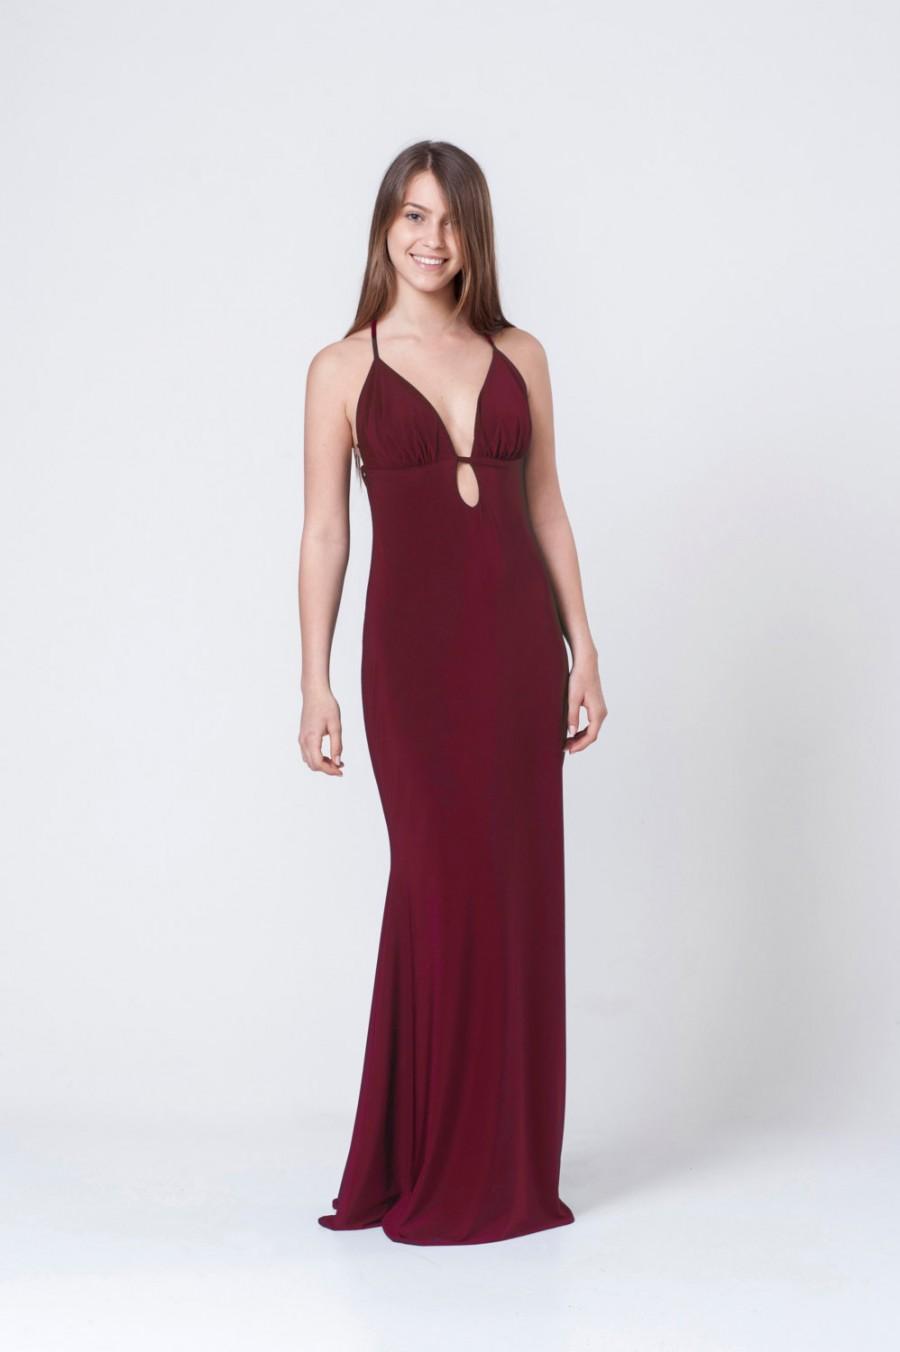 Mariage - Burgundey bridesmaid maxi dress - Open back flaming burgundey dress -Spaghetti full length dress